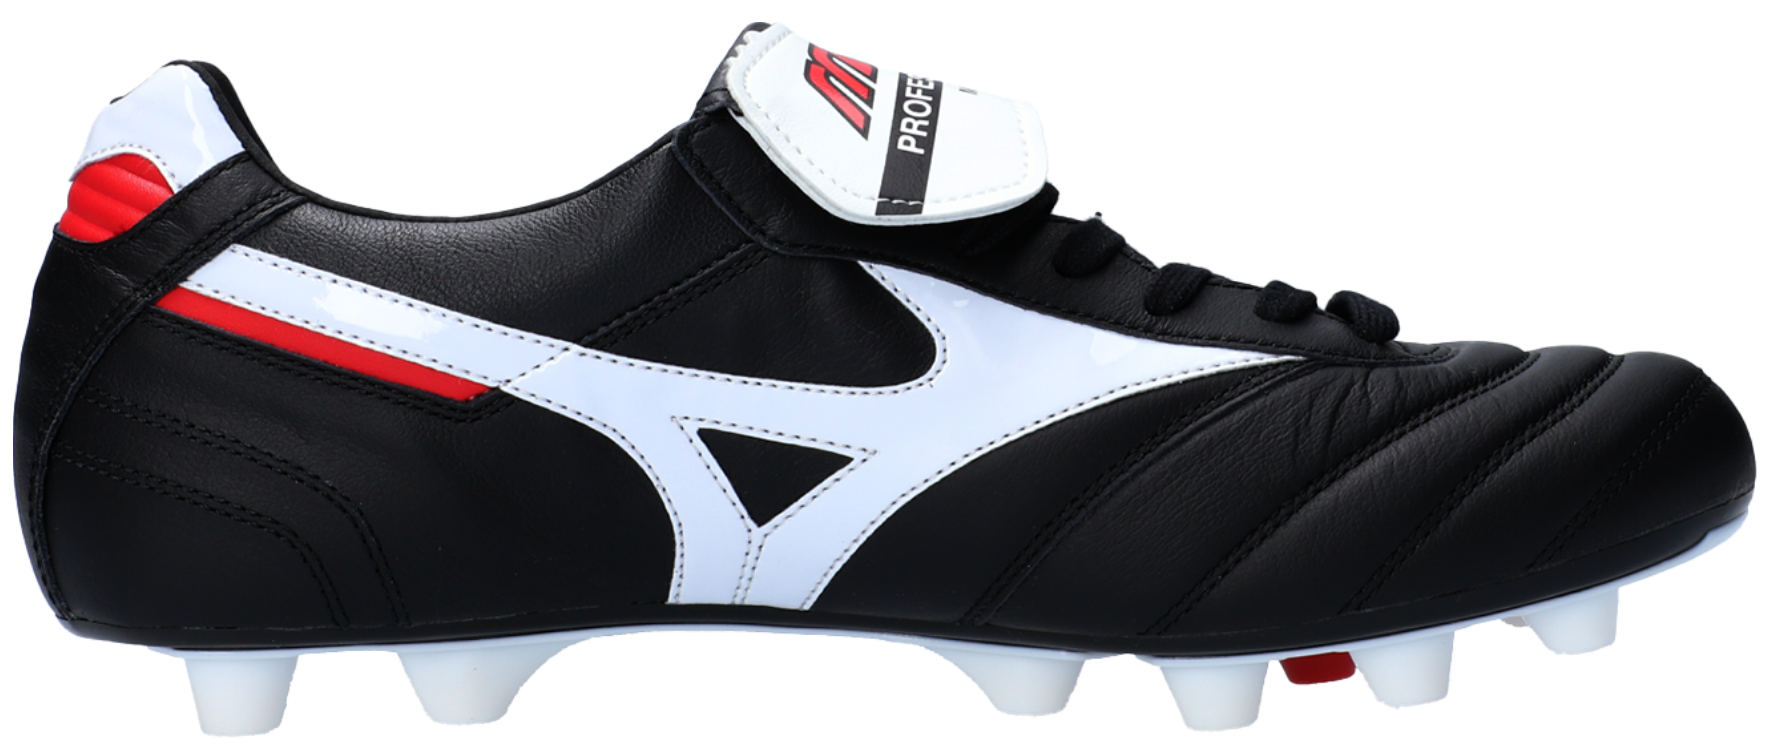 Football shoes Mizuno Morelia II Made in Japan FG - Top4Football.com